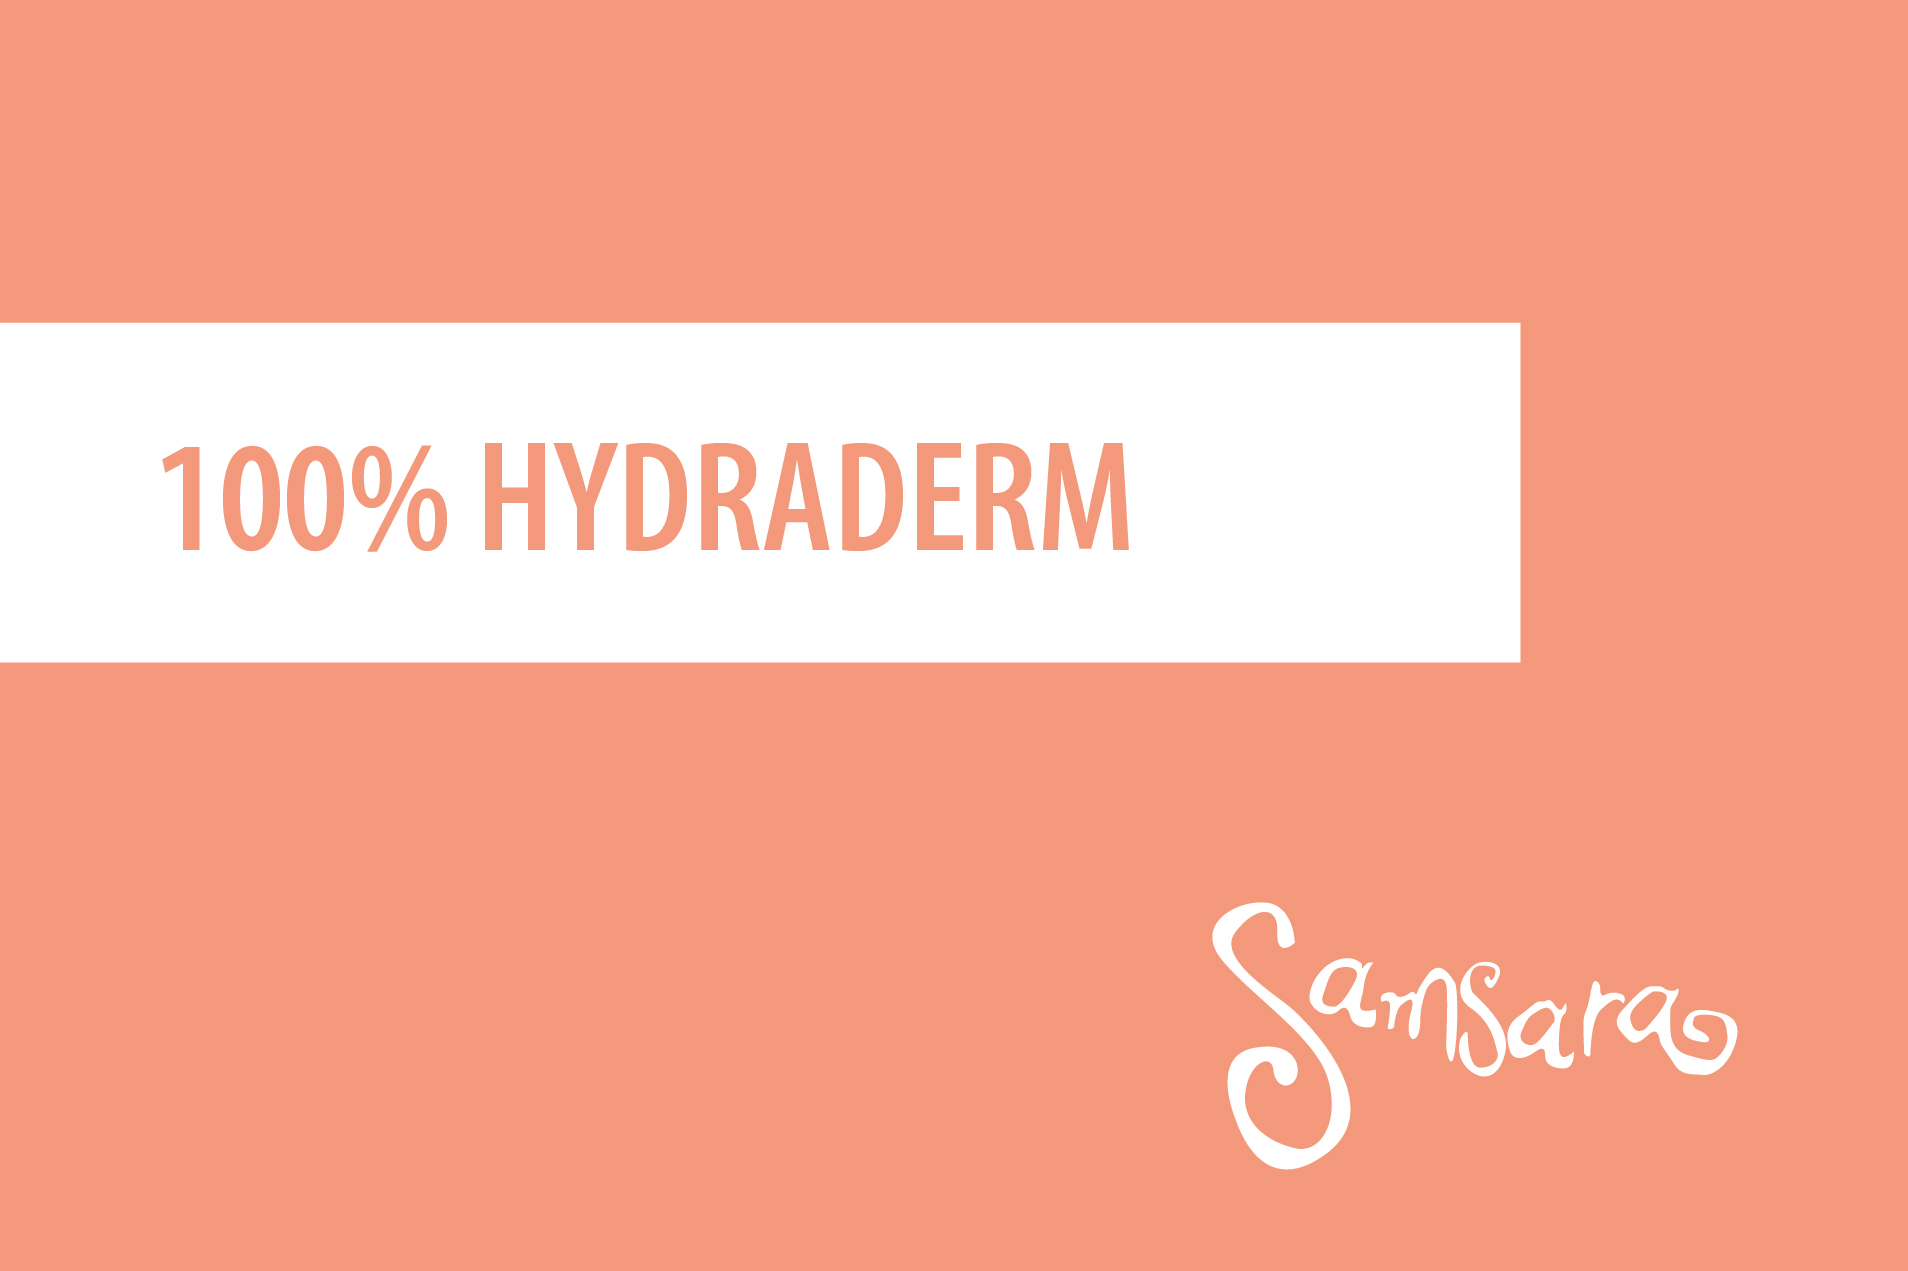 100% HYDRADERM